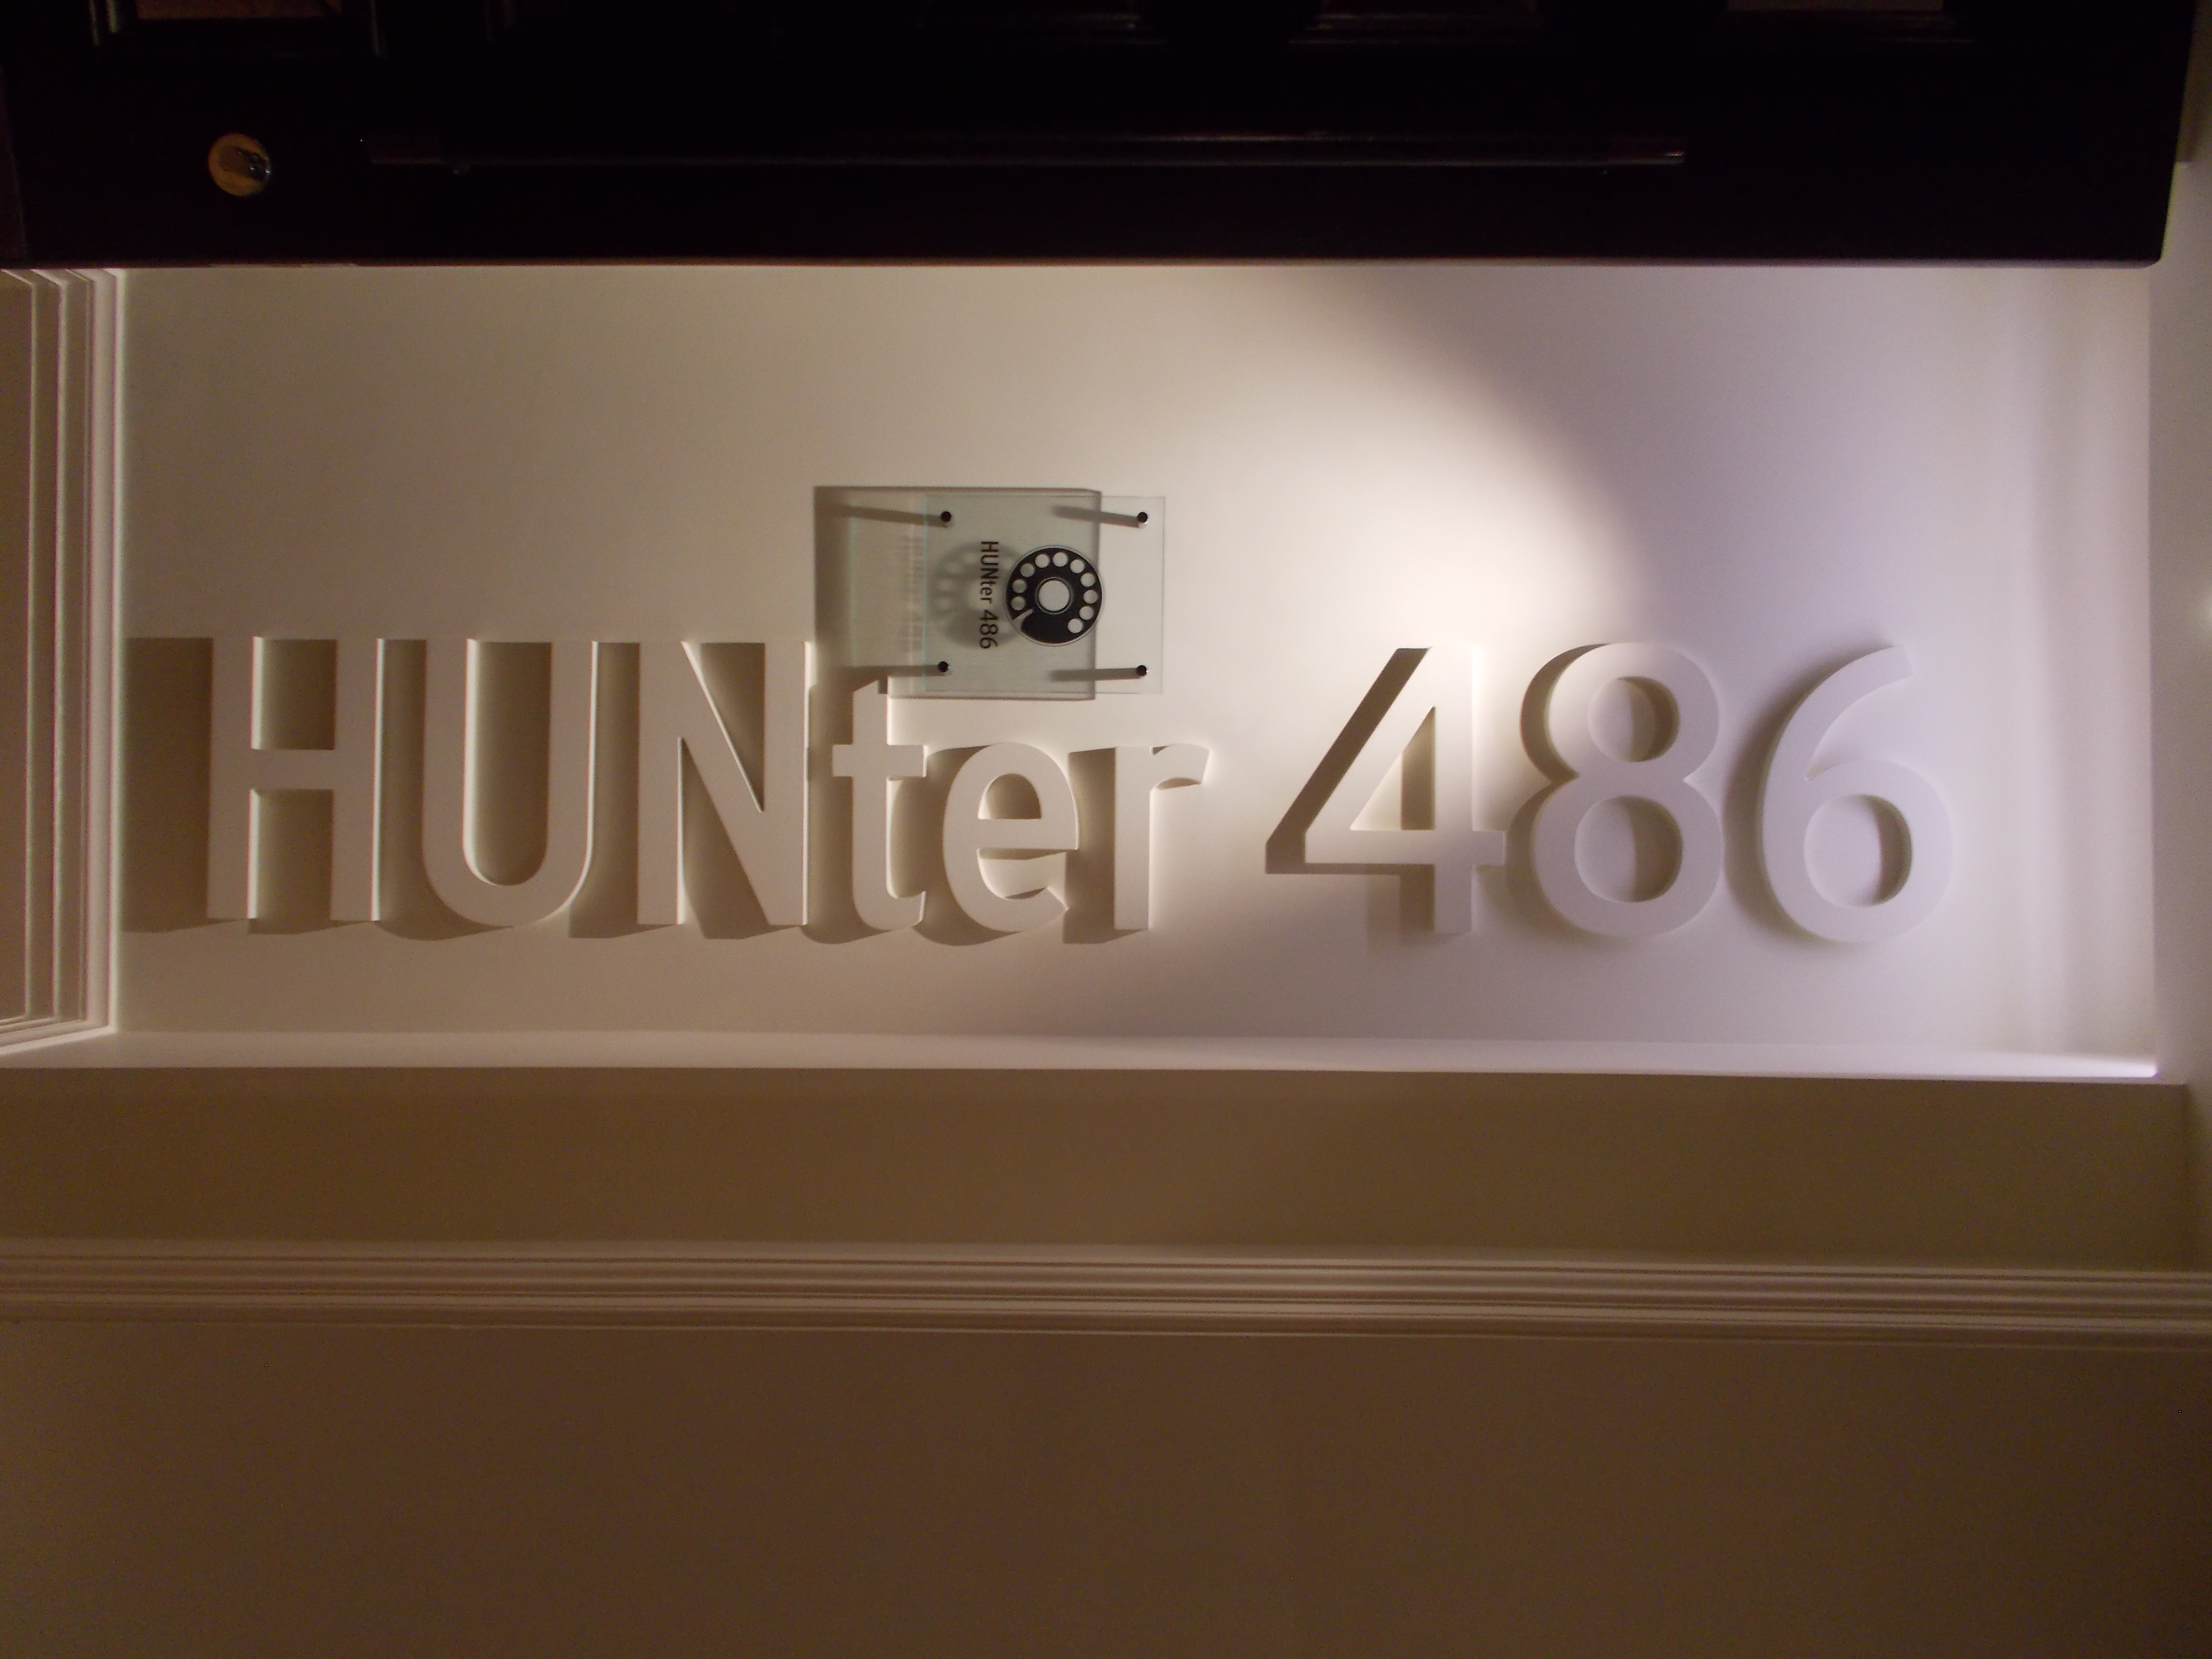 Hunter 486 Central London Boutique Hotel Restaurant